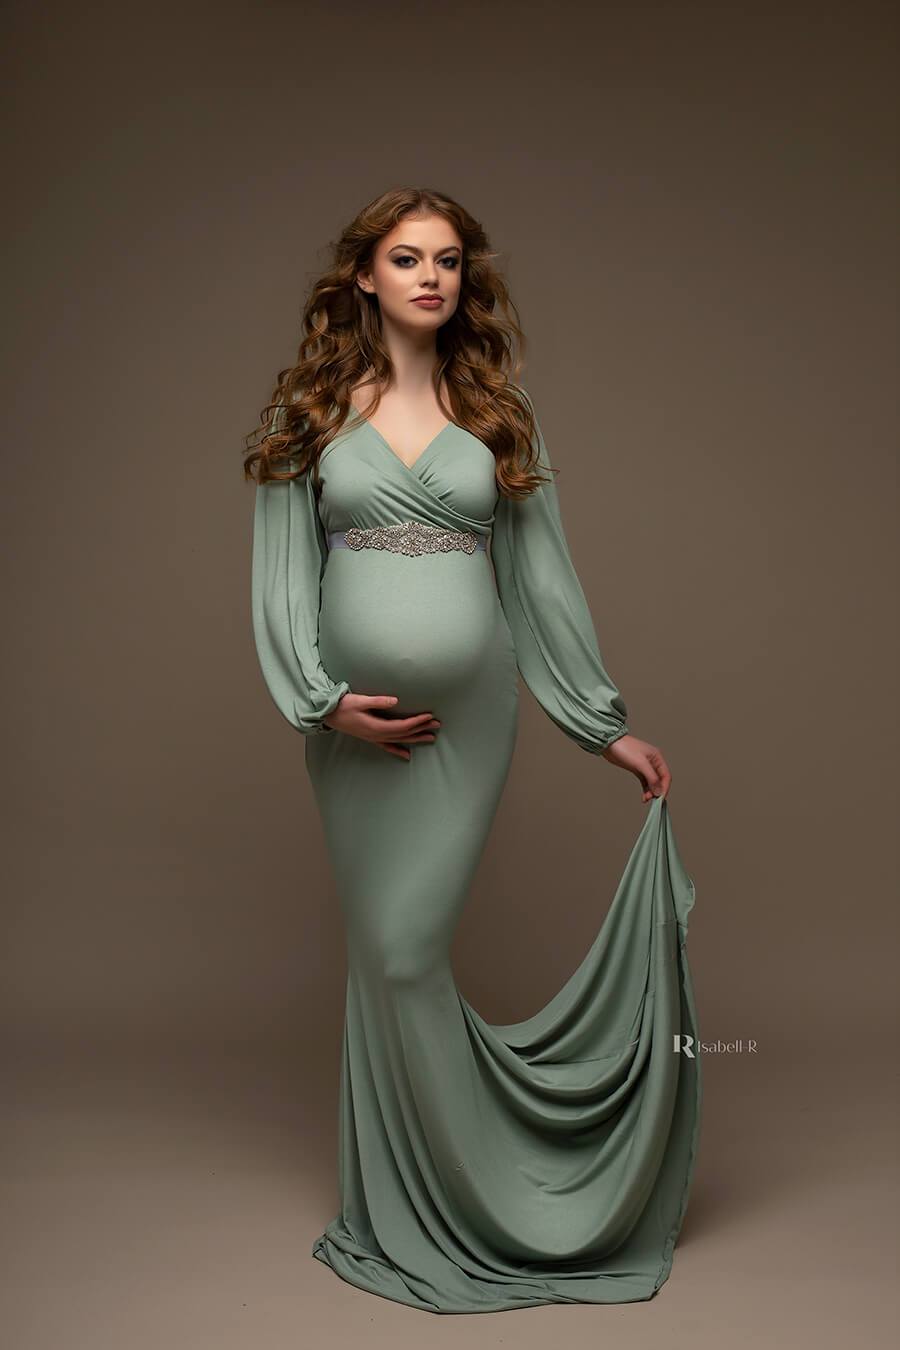 sage green maternity dress